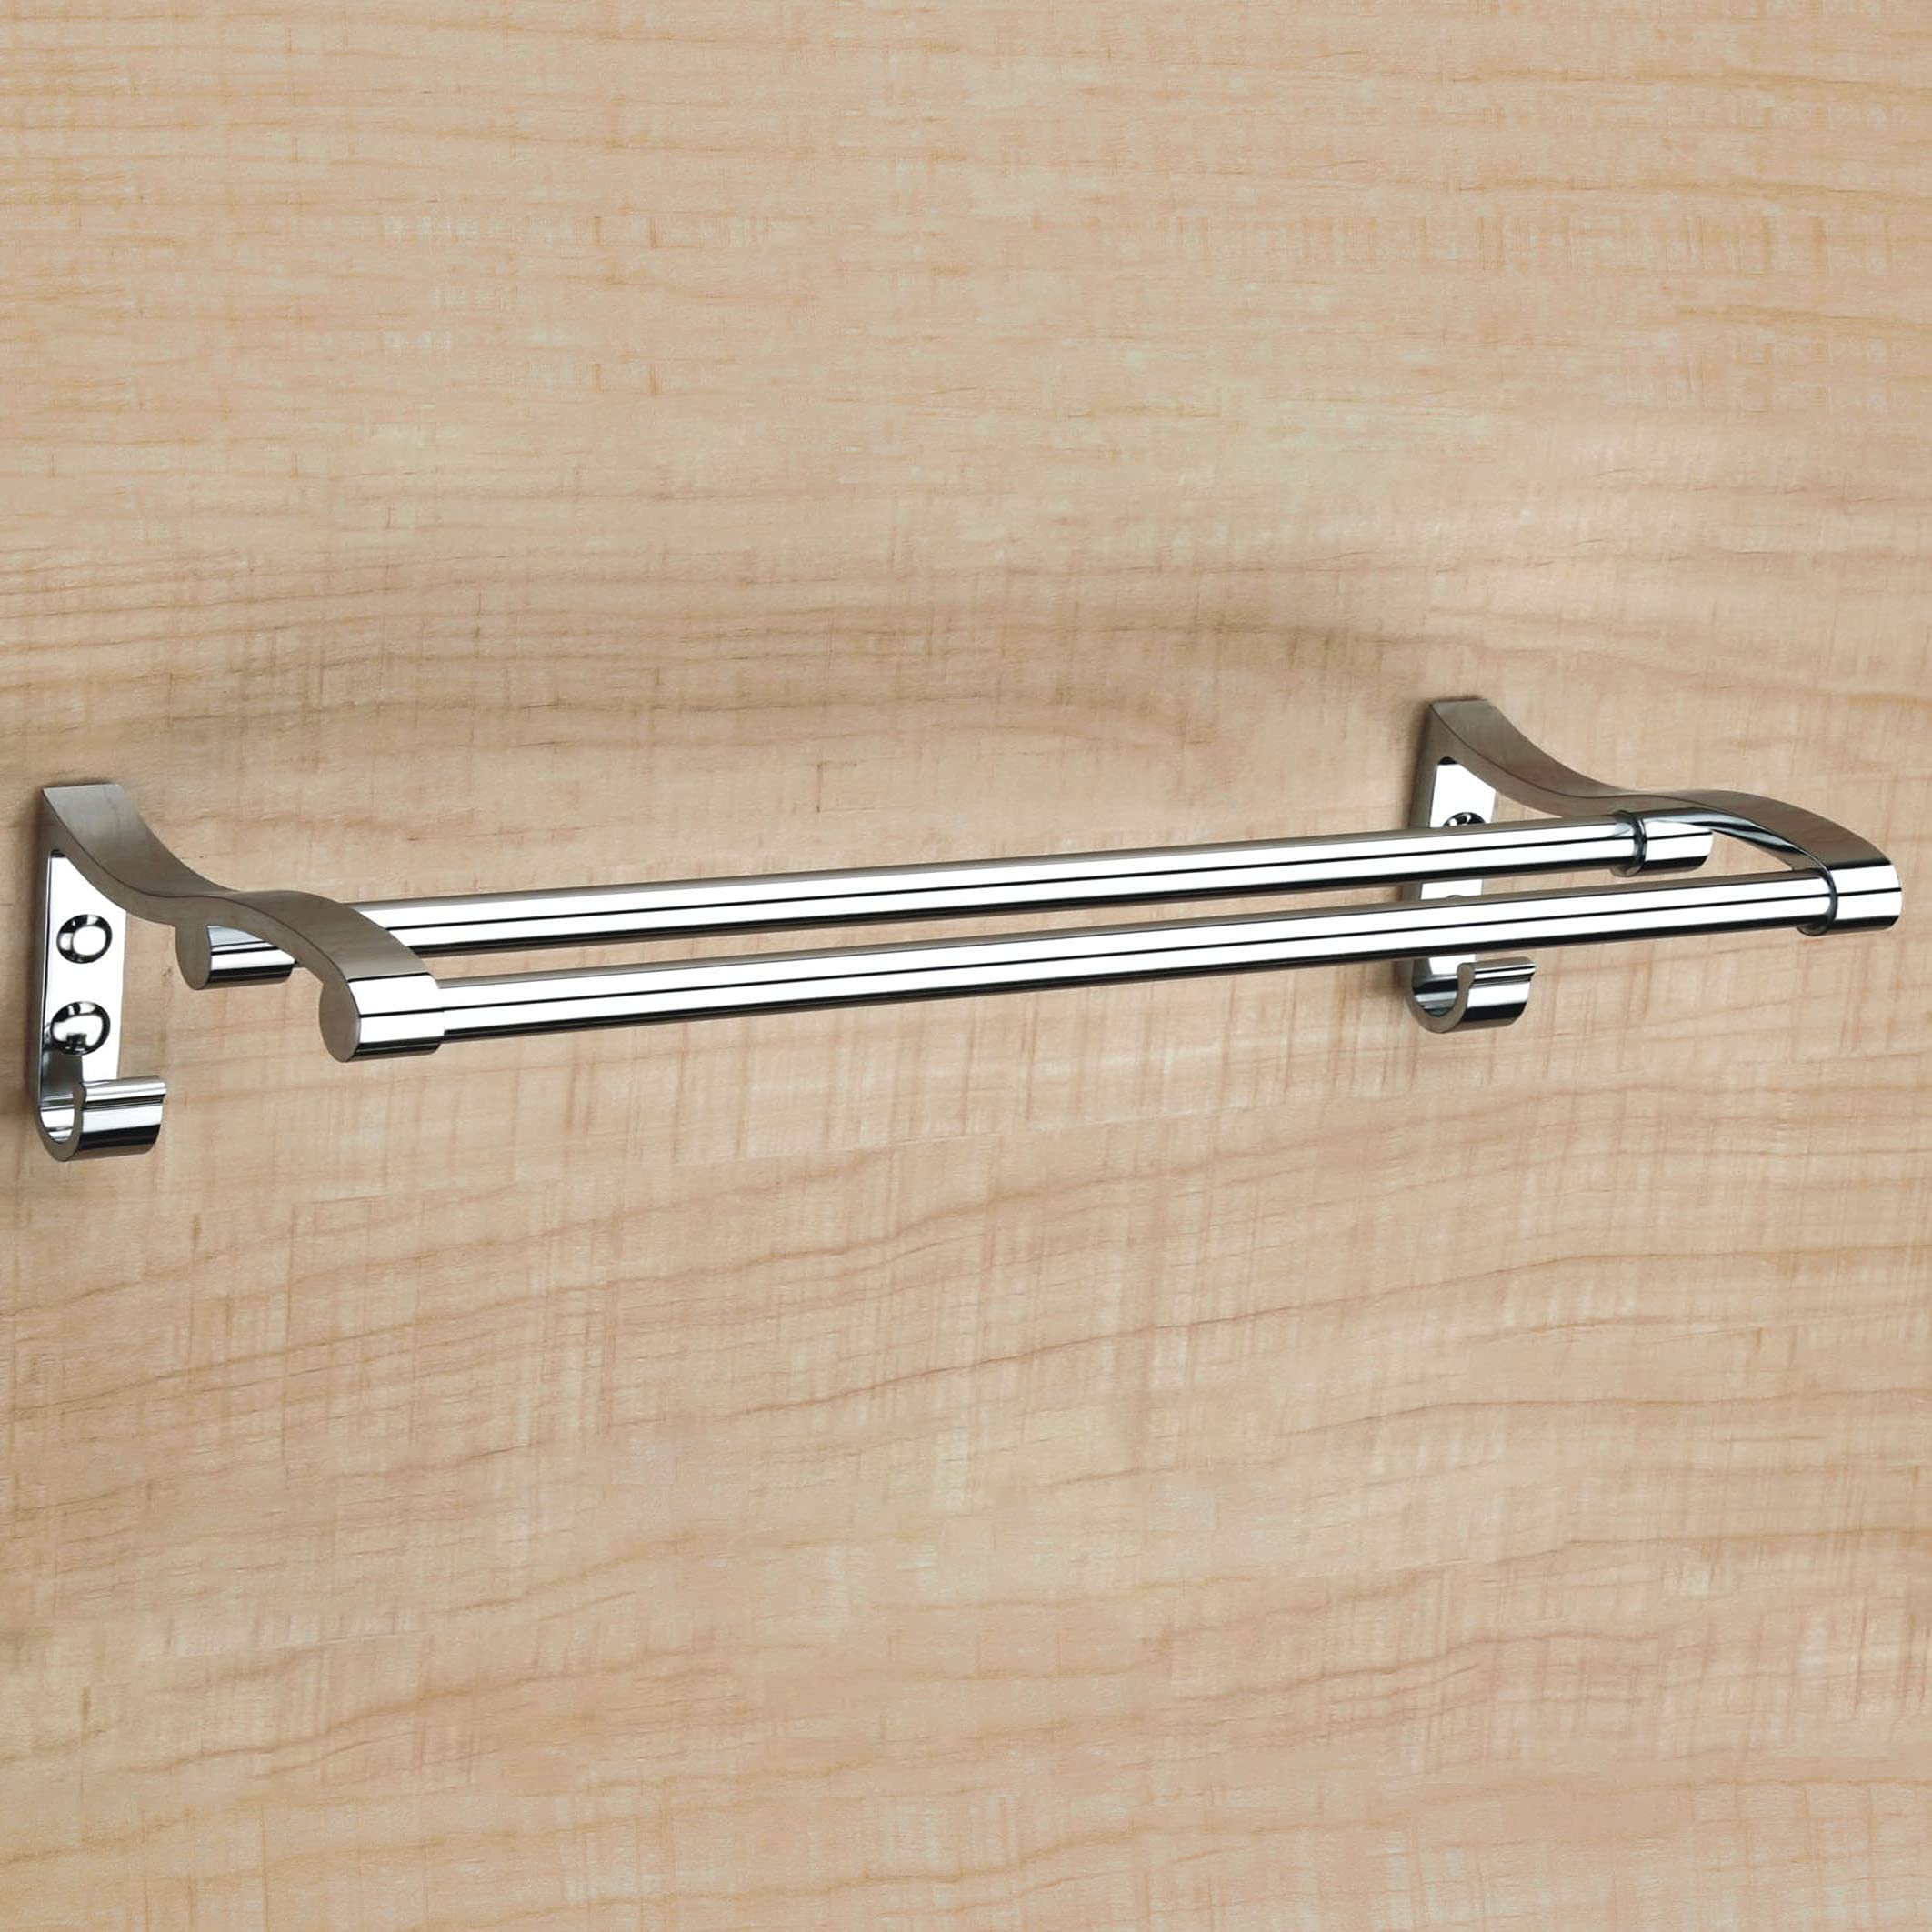 Plantex Stainless Steel Towel Rod for Bathroom/Towel Hanger/Bar/Bathroom Accessories (18 Inch - Chrome)